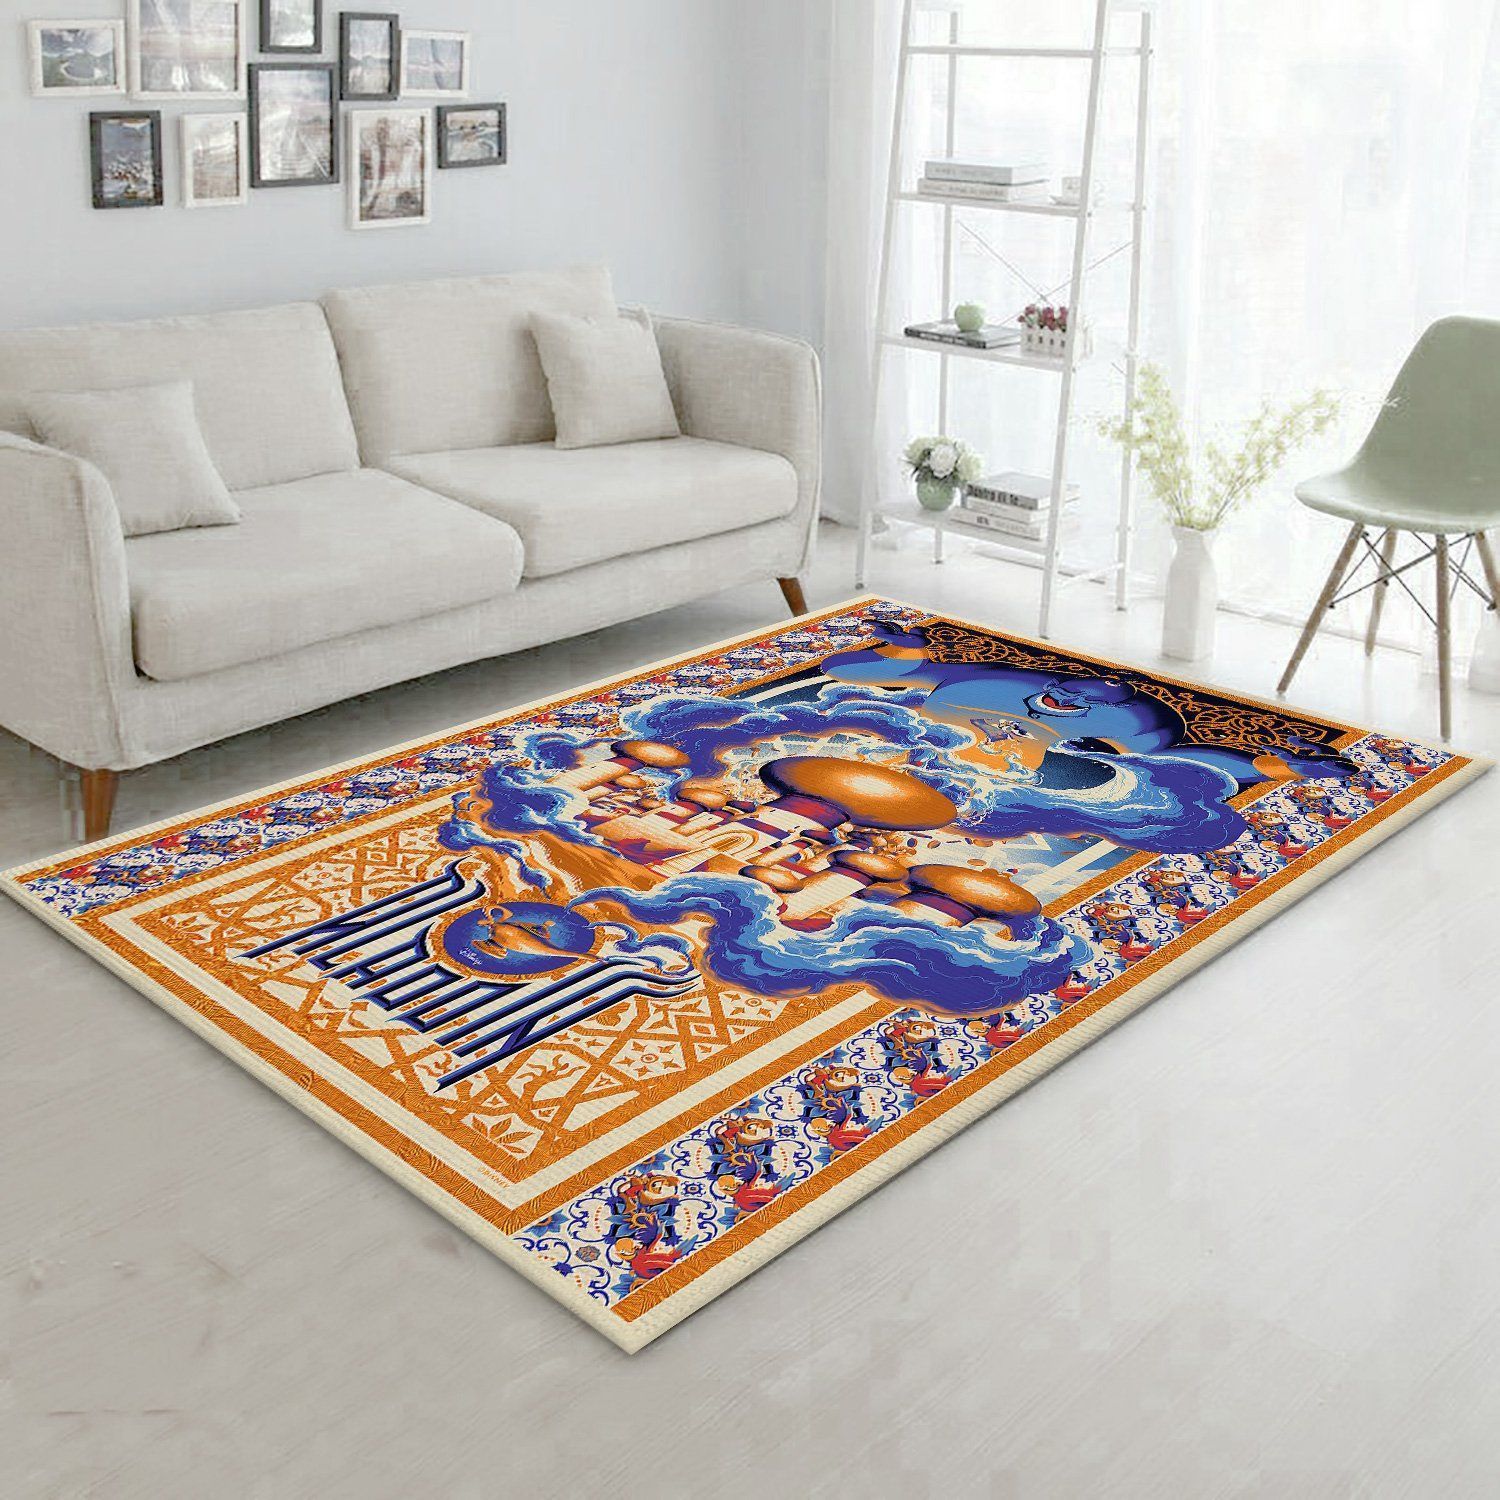 Aladdin Disney Movies Area Rugs Living Room Carpet Floor Decor The US D cor - Indoor Outdoor Rugs 3